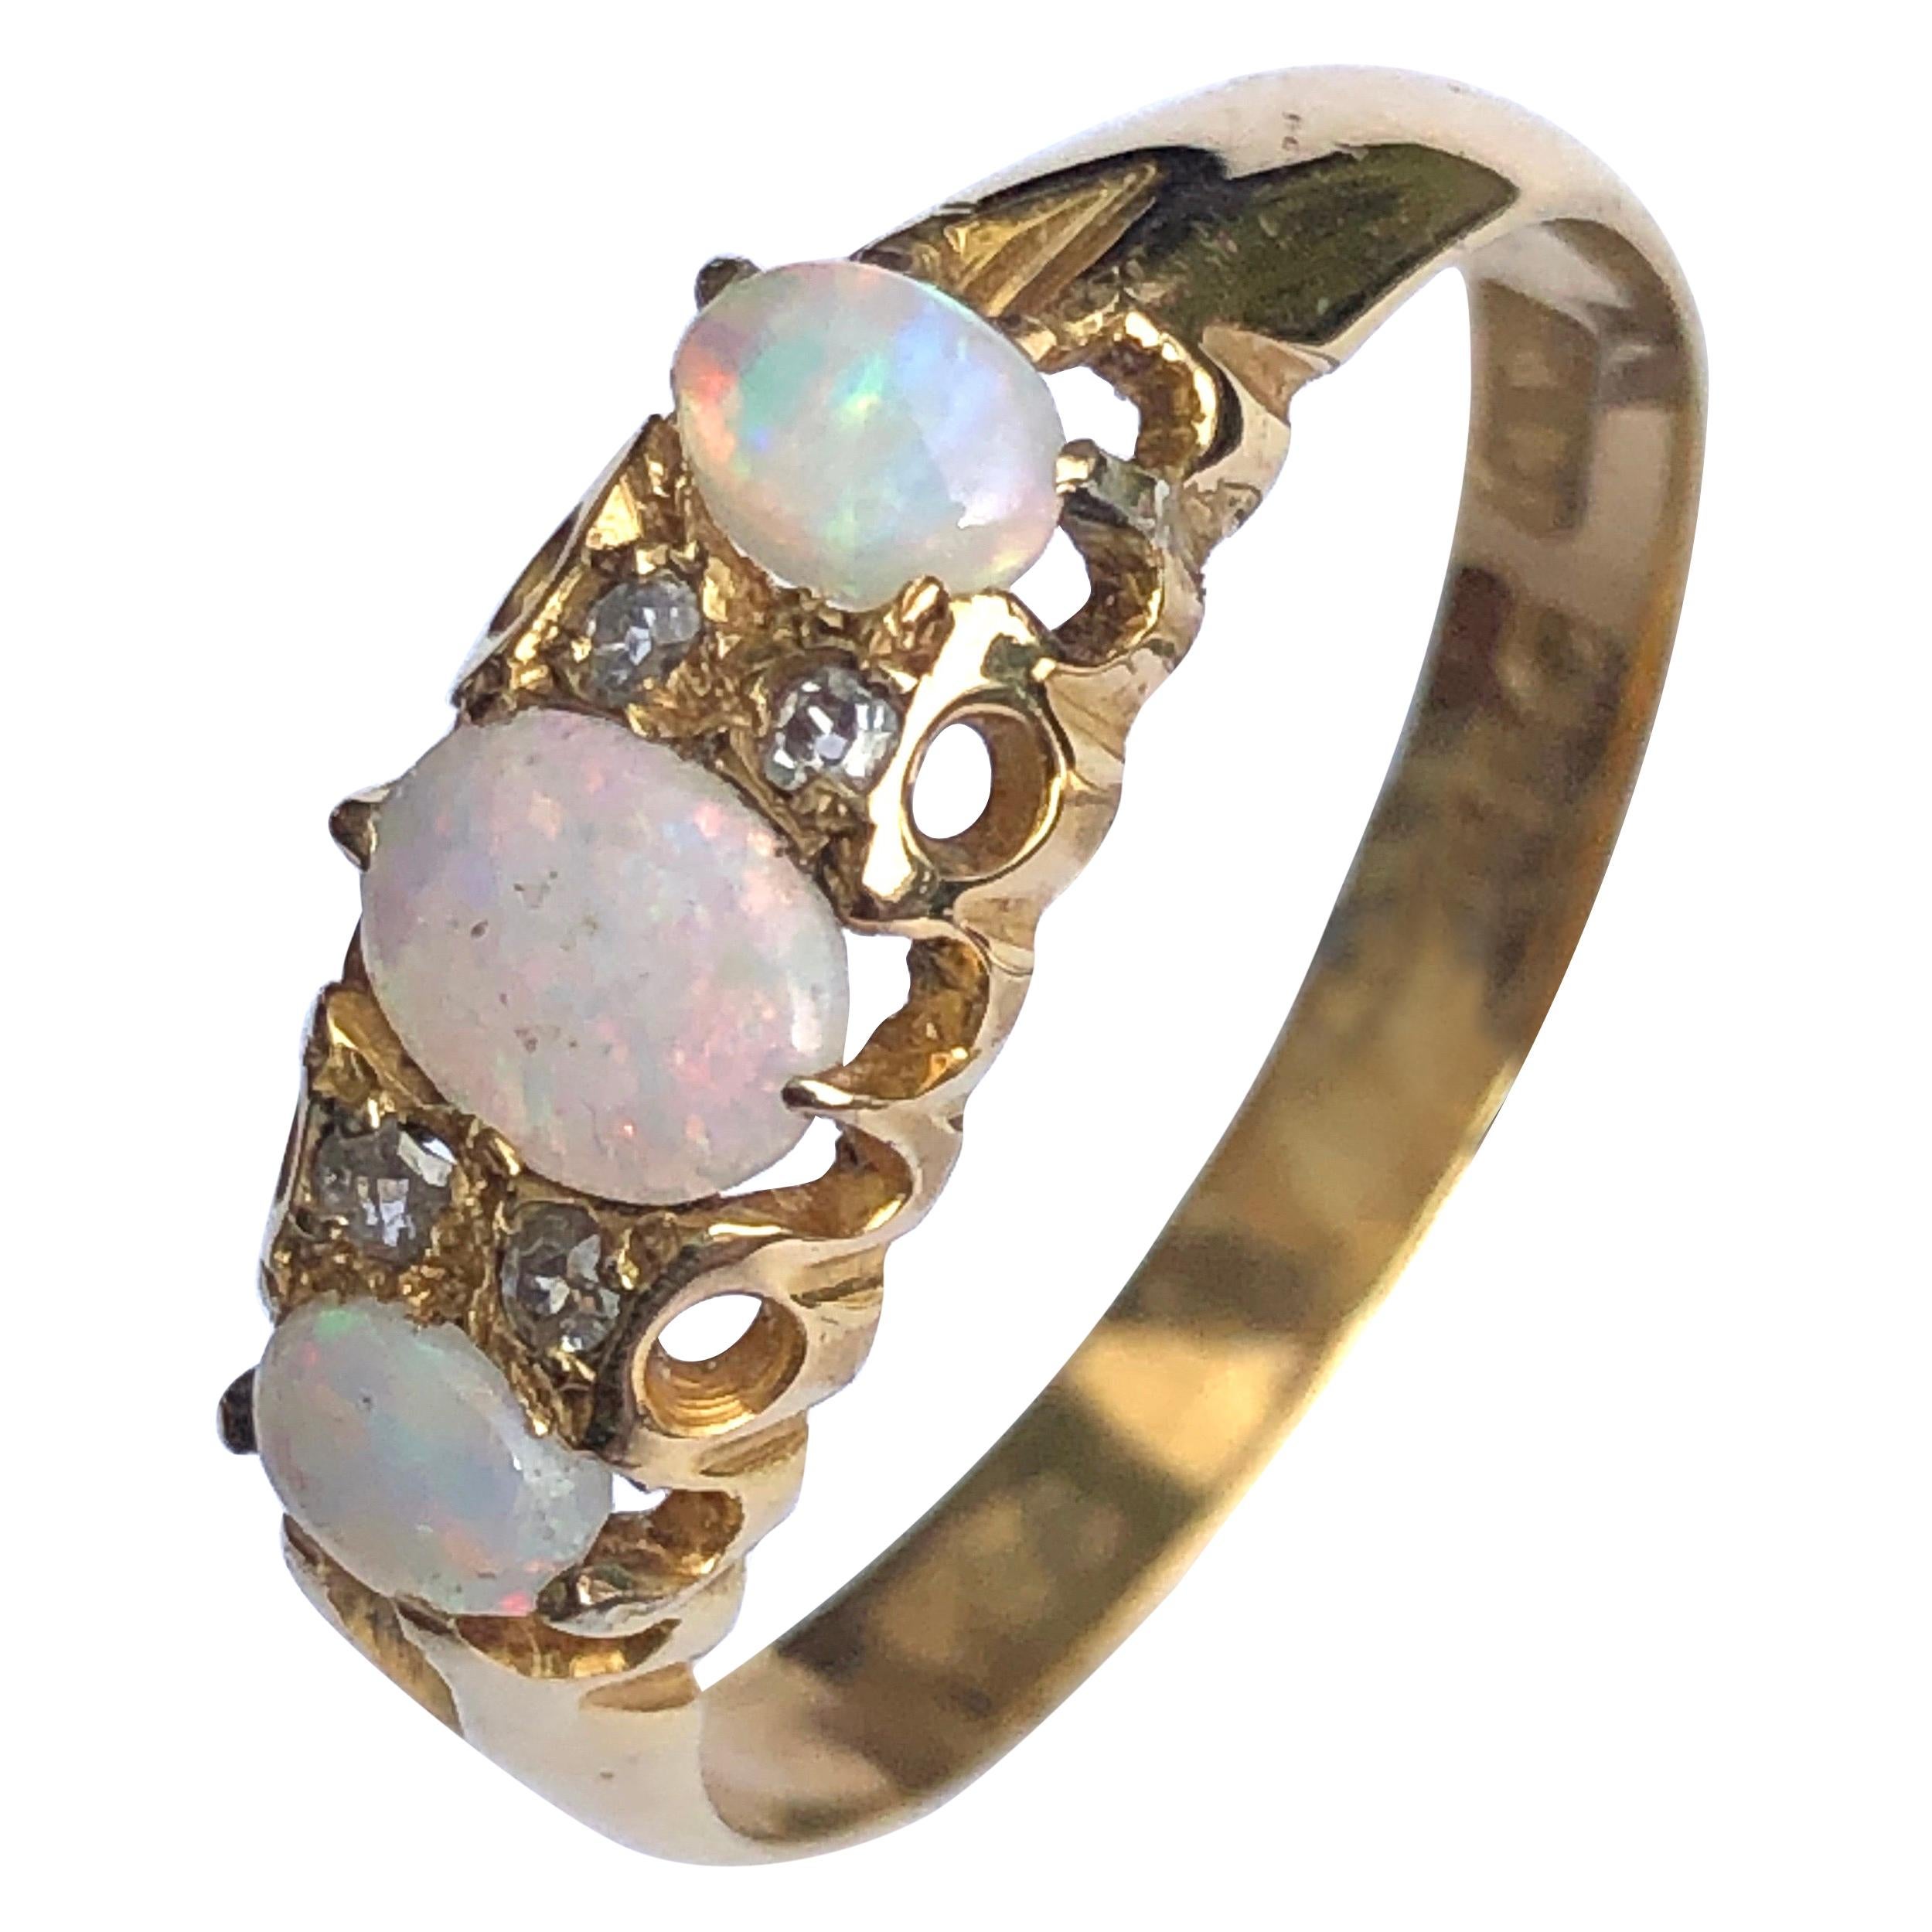 Edwardian Opal and Diamond 18 Carat Gold Three-Stone Ring